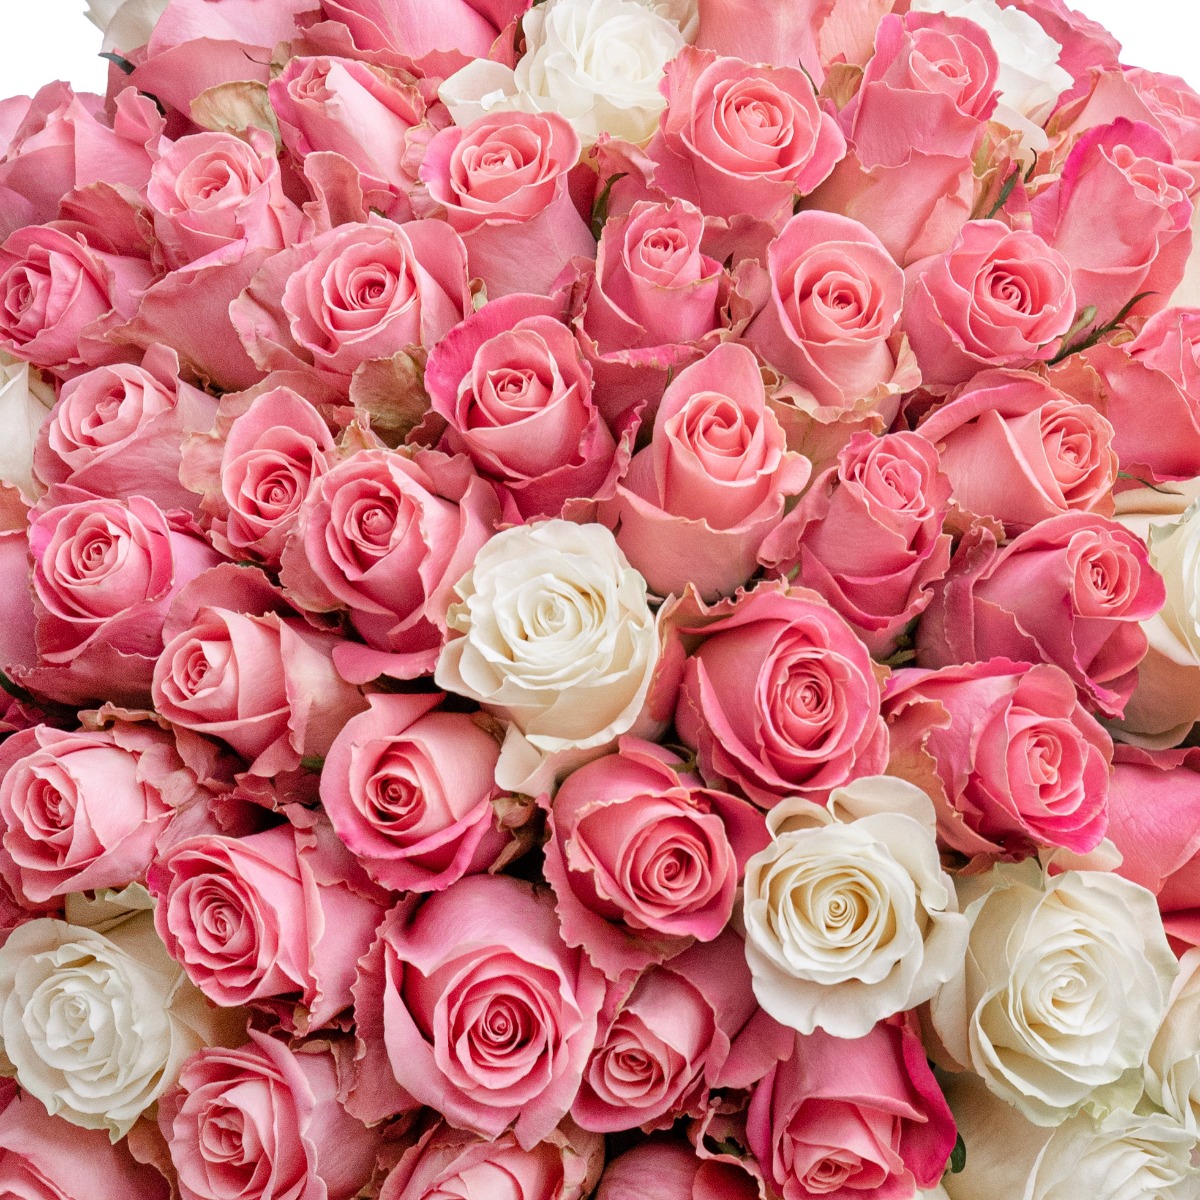 Buchet 101 trandafiri roz si albi